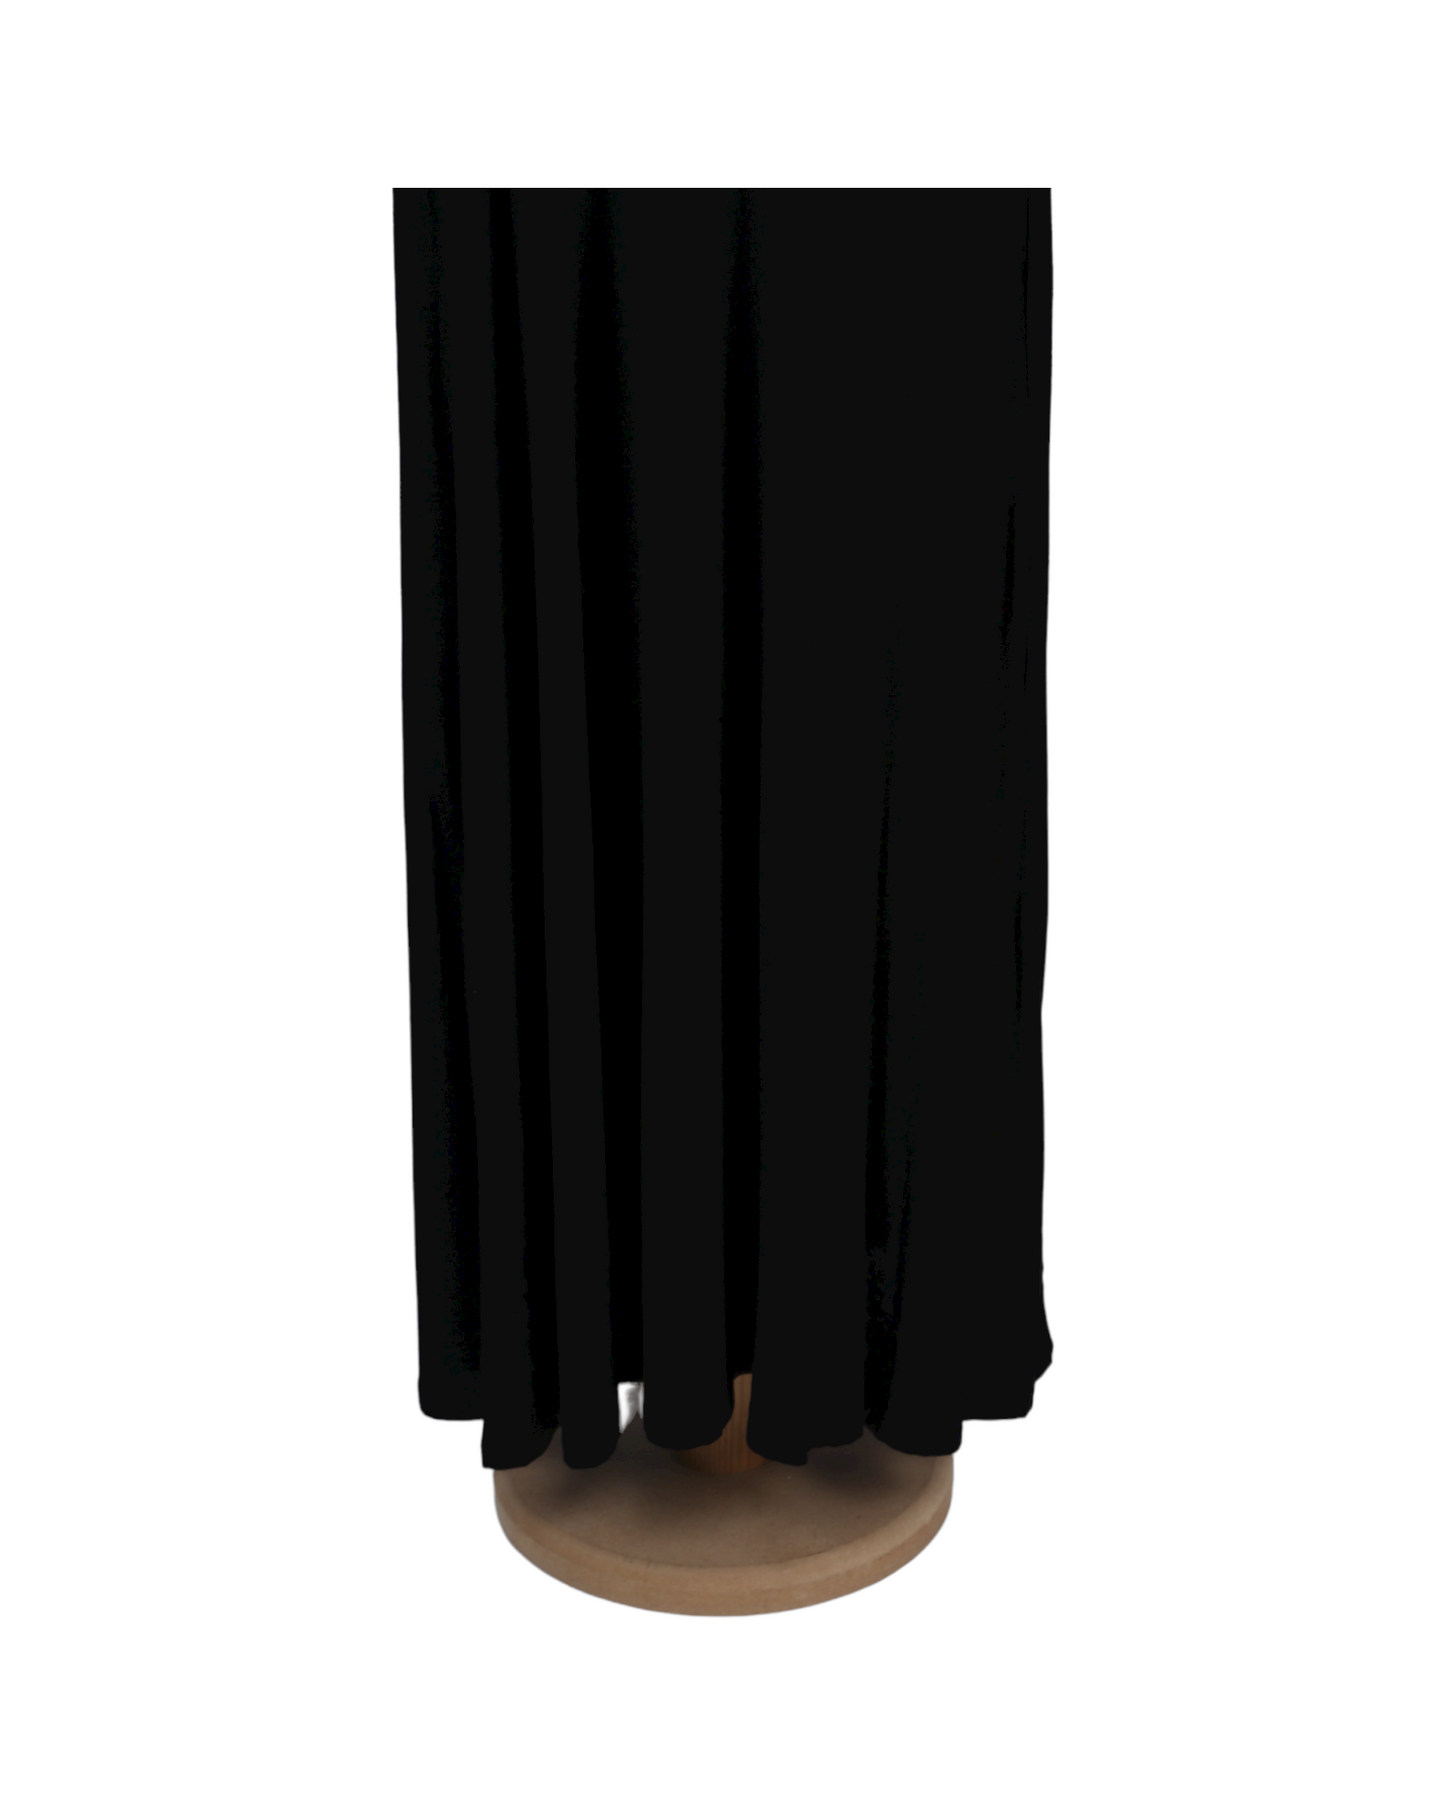 Armani Long Black Dress